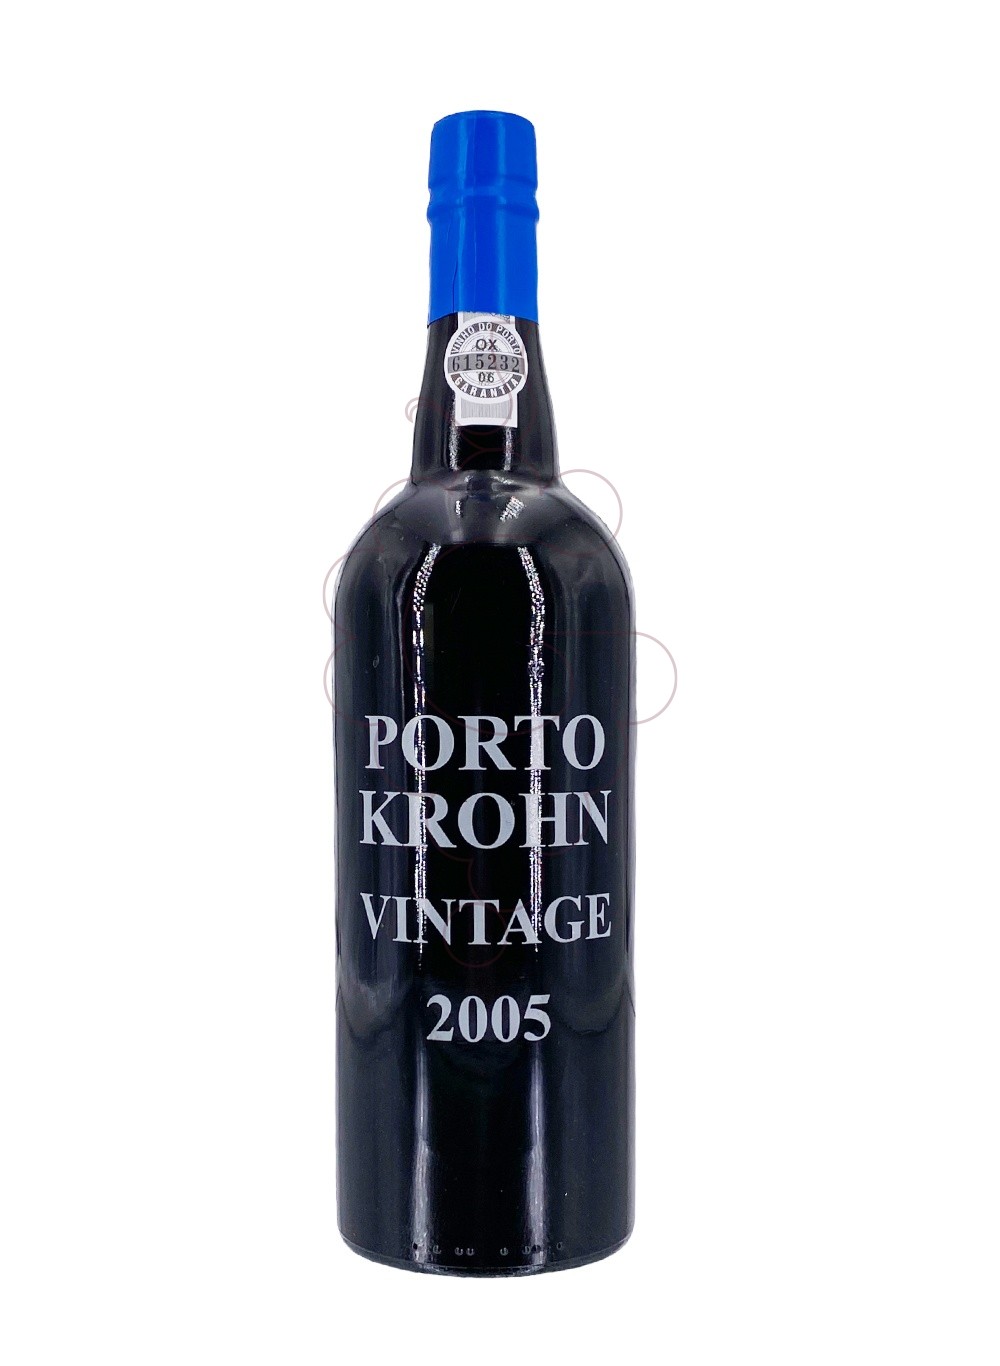 Photo Krohn vintage 2005 75 cl fortified wine